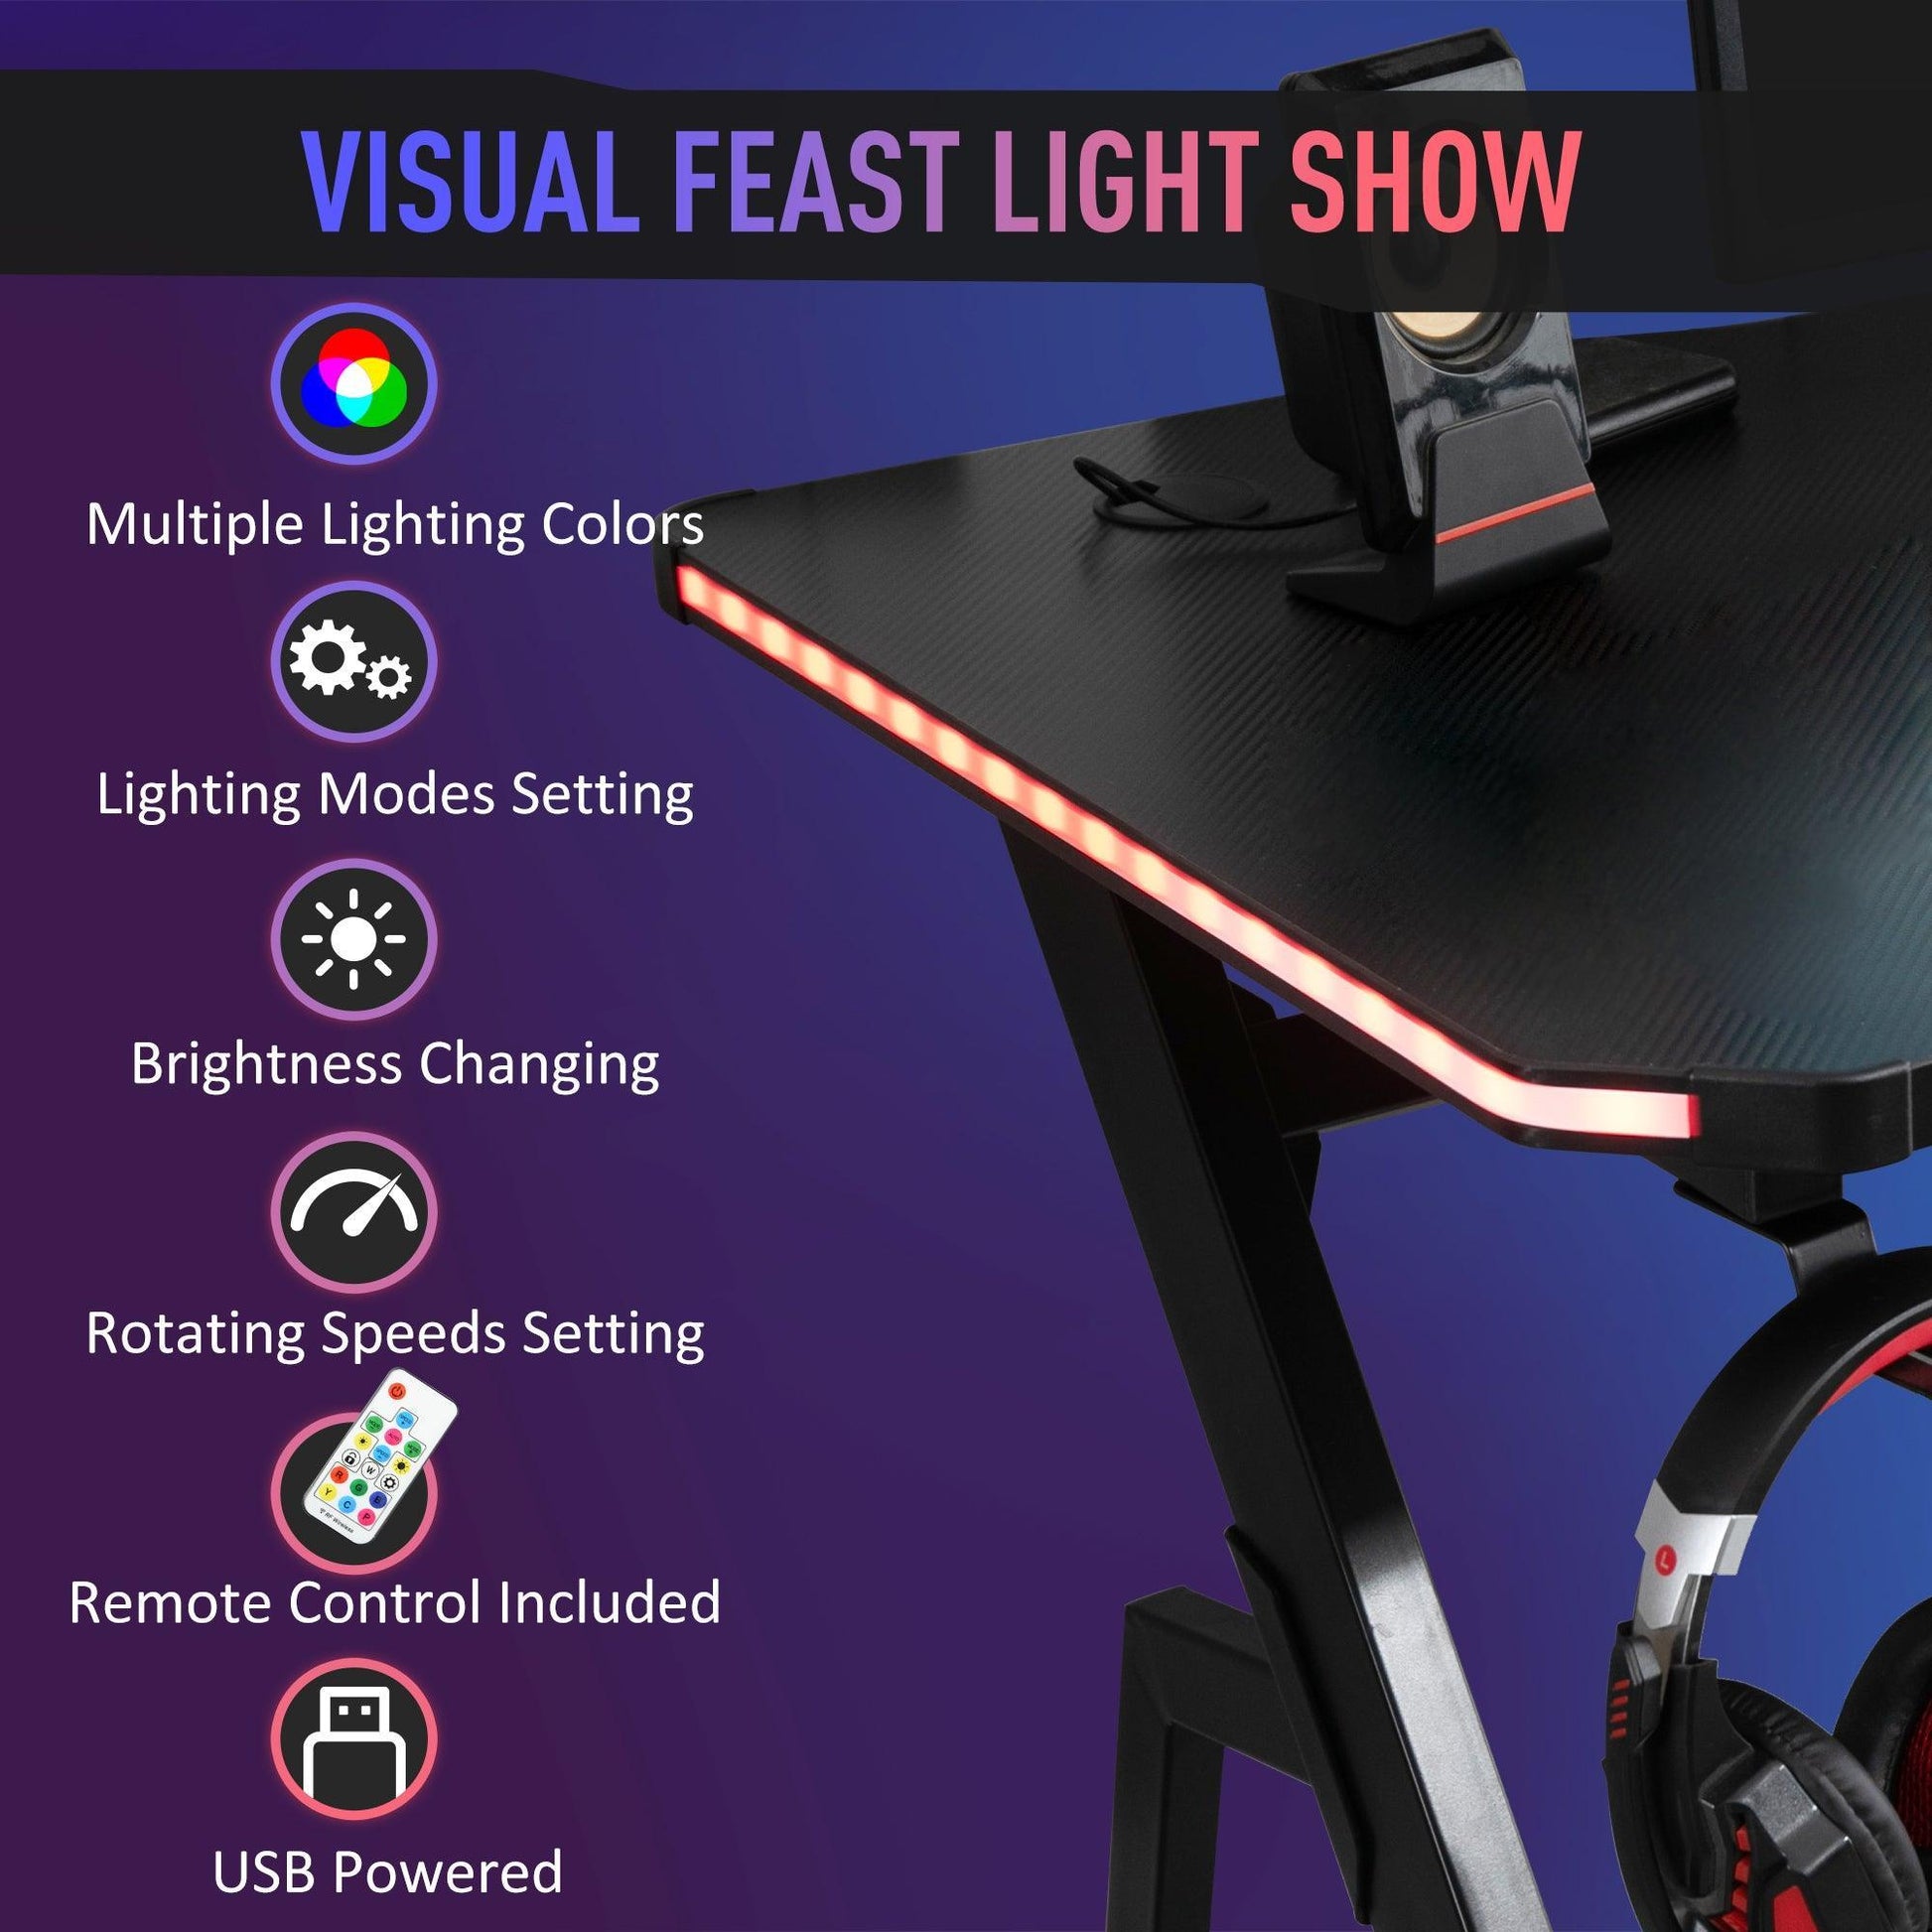 HOMCOM Gaming Desk with RGB LED Lights - Black - ALL4U RETAILER LTD